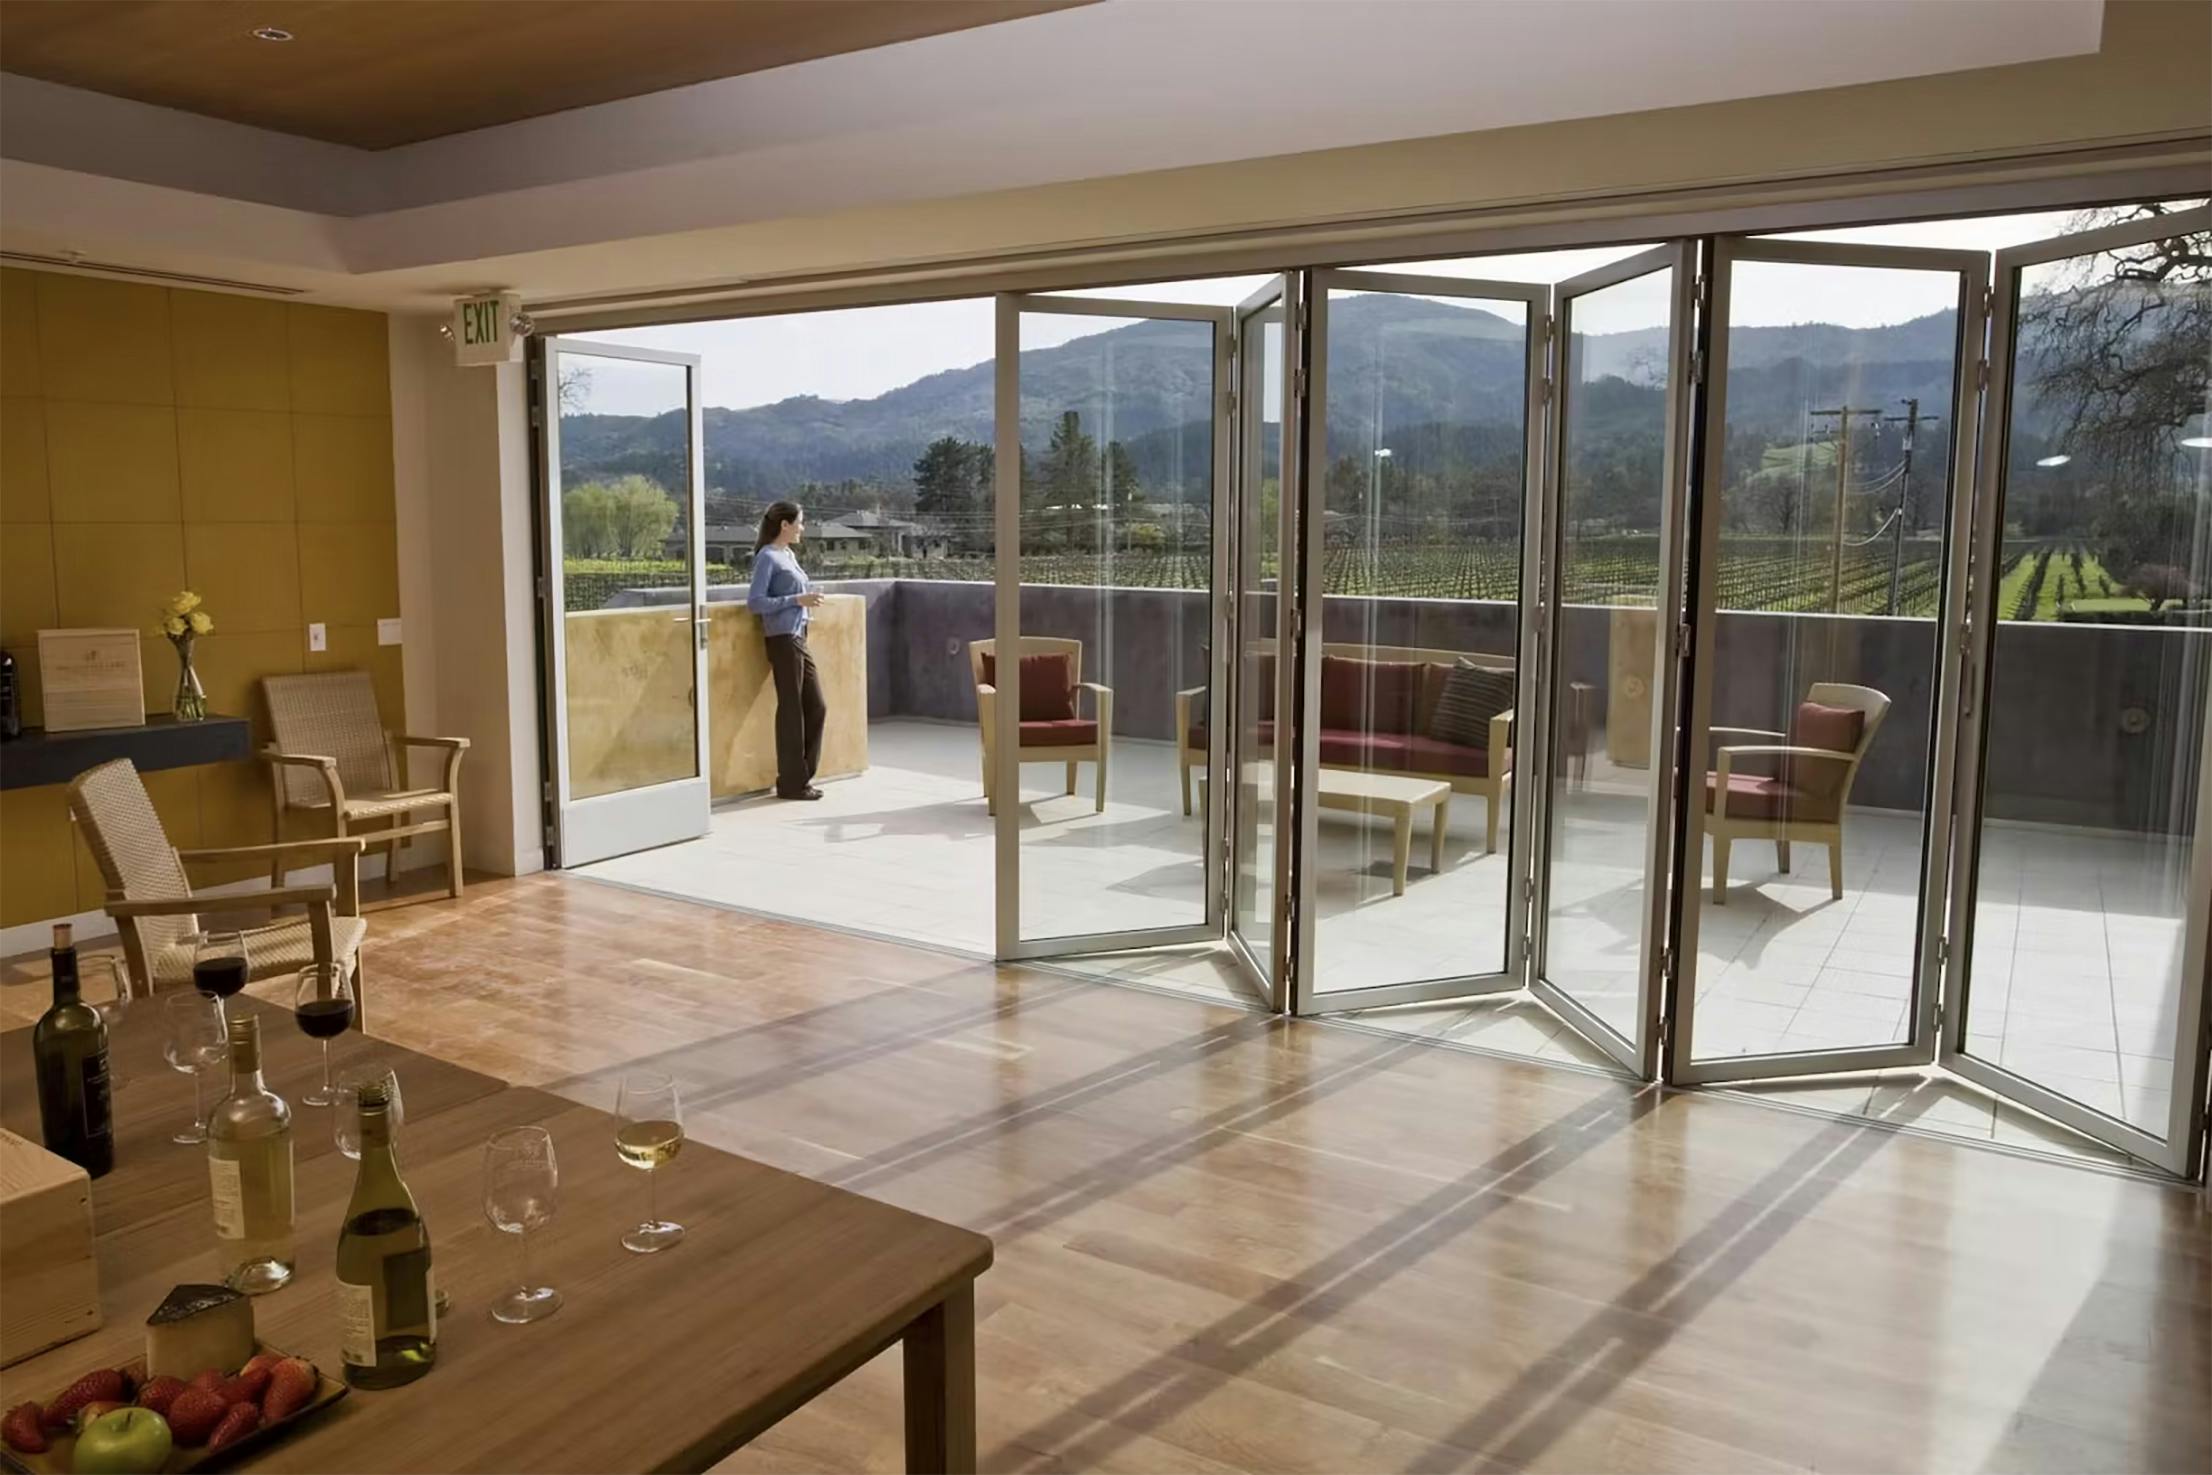 winery design with indoor outdoor experience